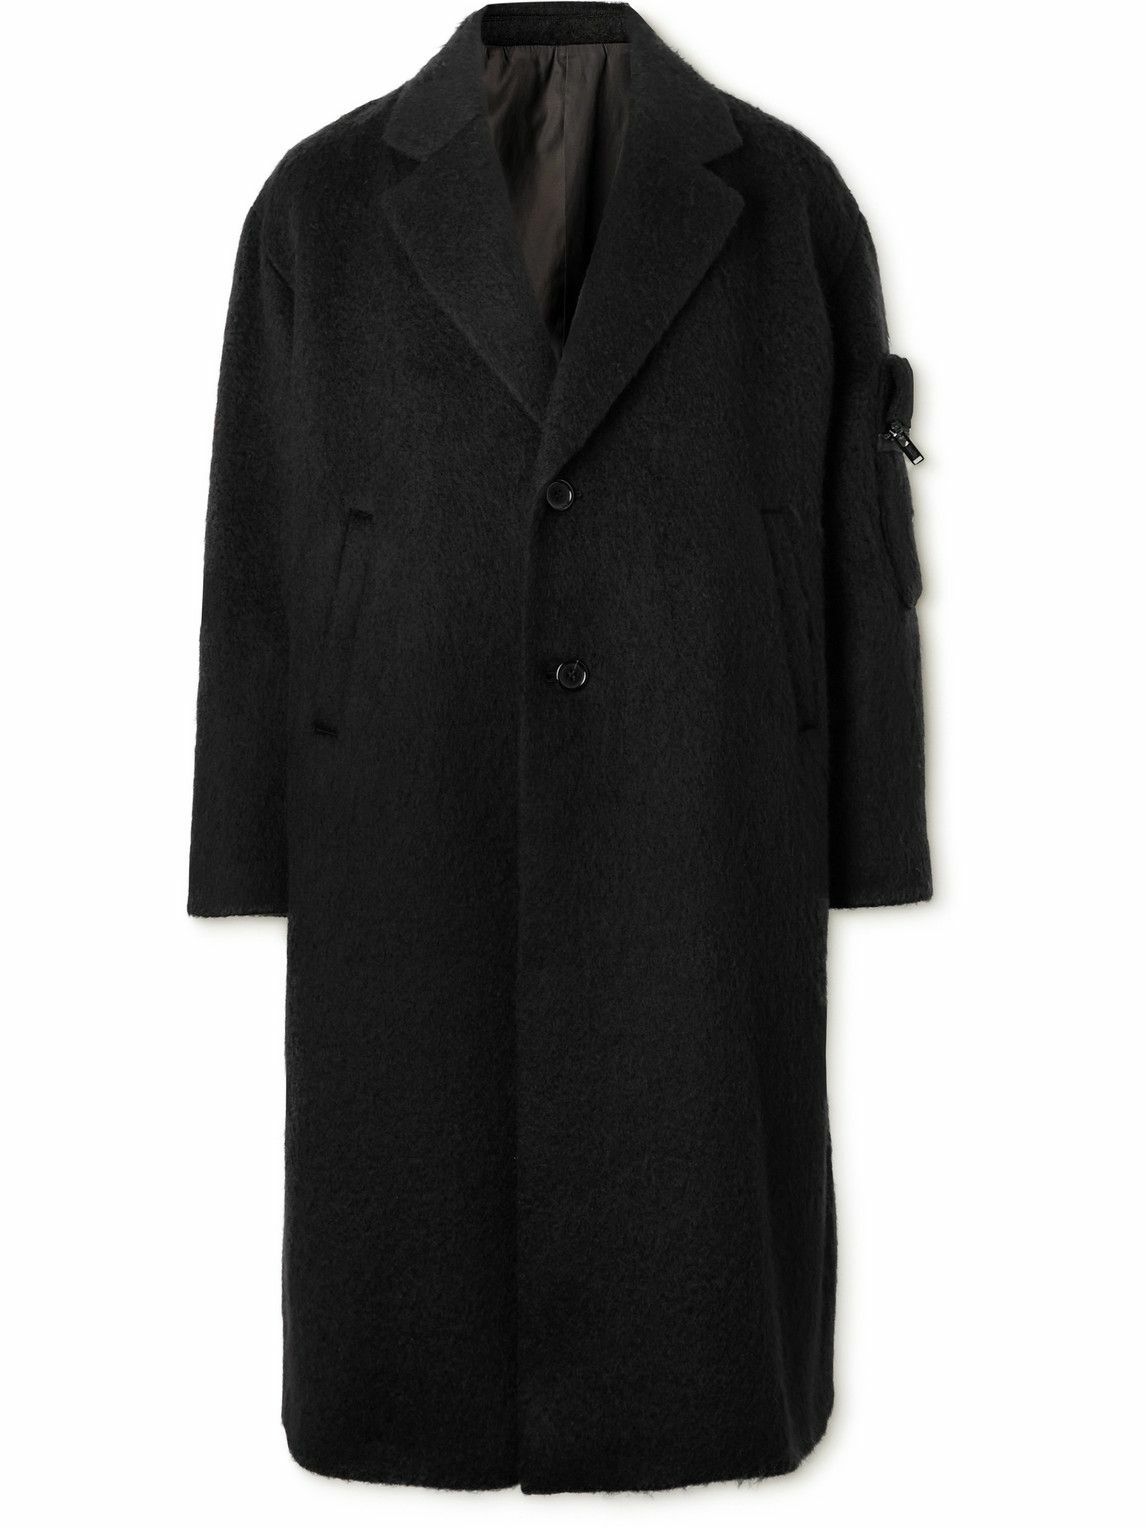 UNDERCOVER - Wool-Blend Coat - Black Undercover